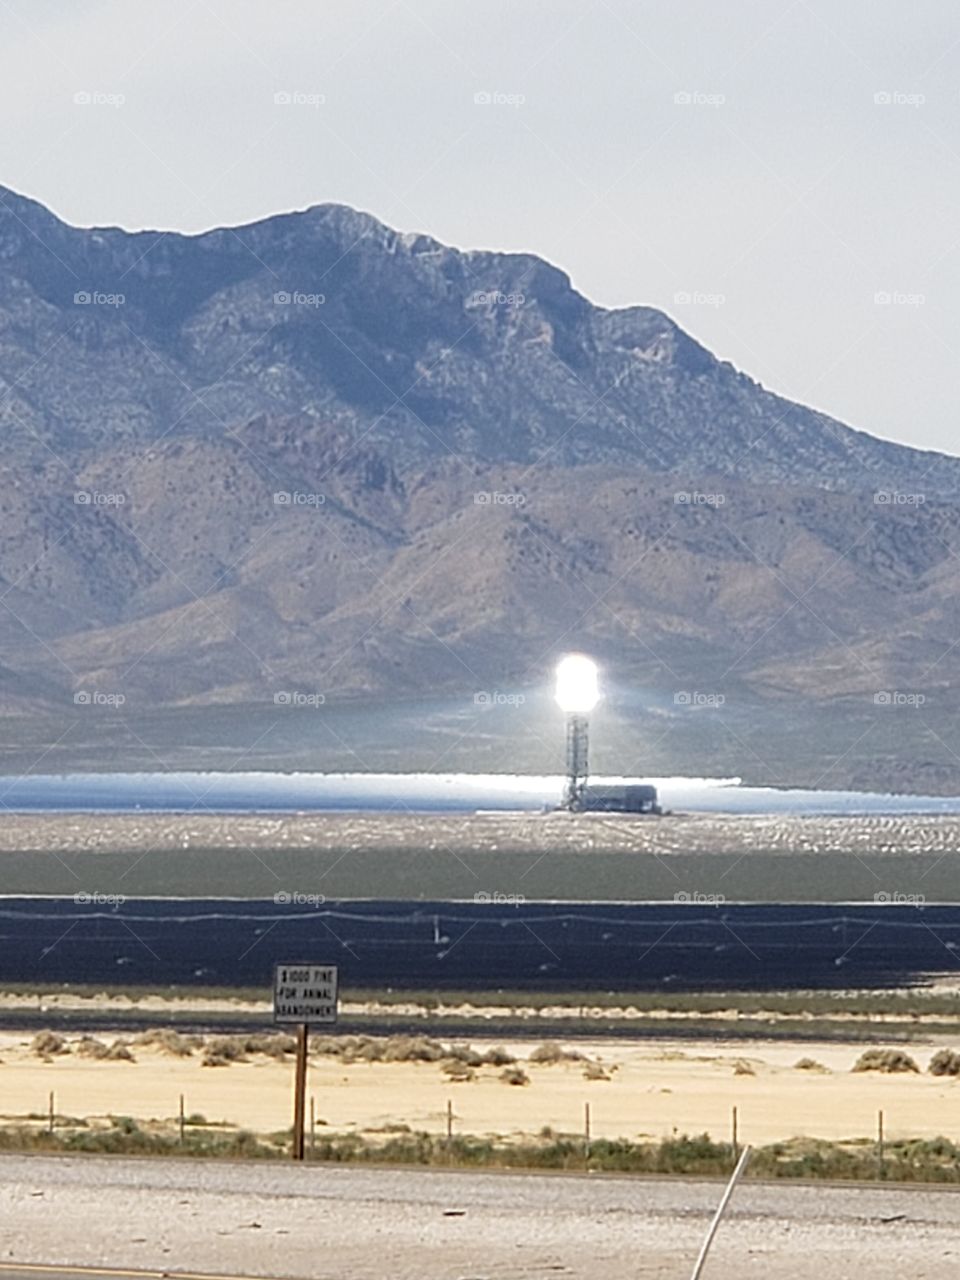 Stateline Primm at California & Nevada, Solar Panels near Primm & I-15 Freeway